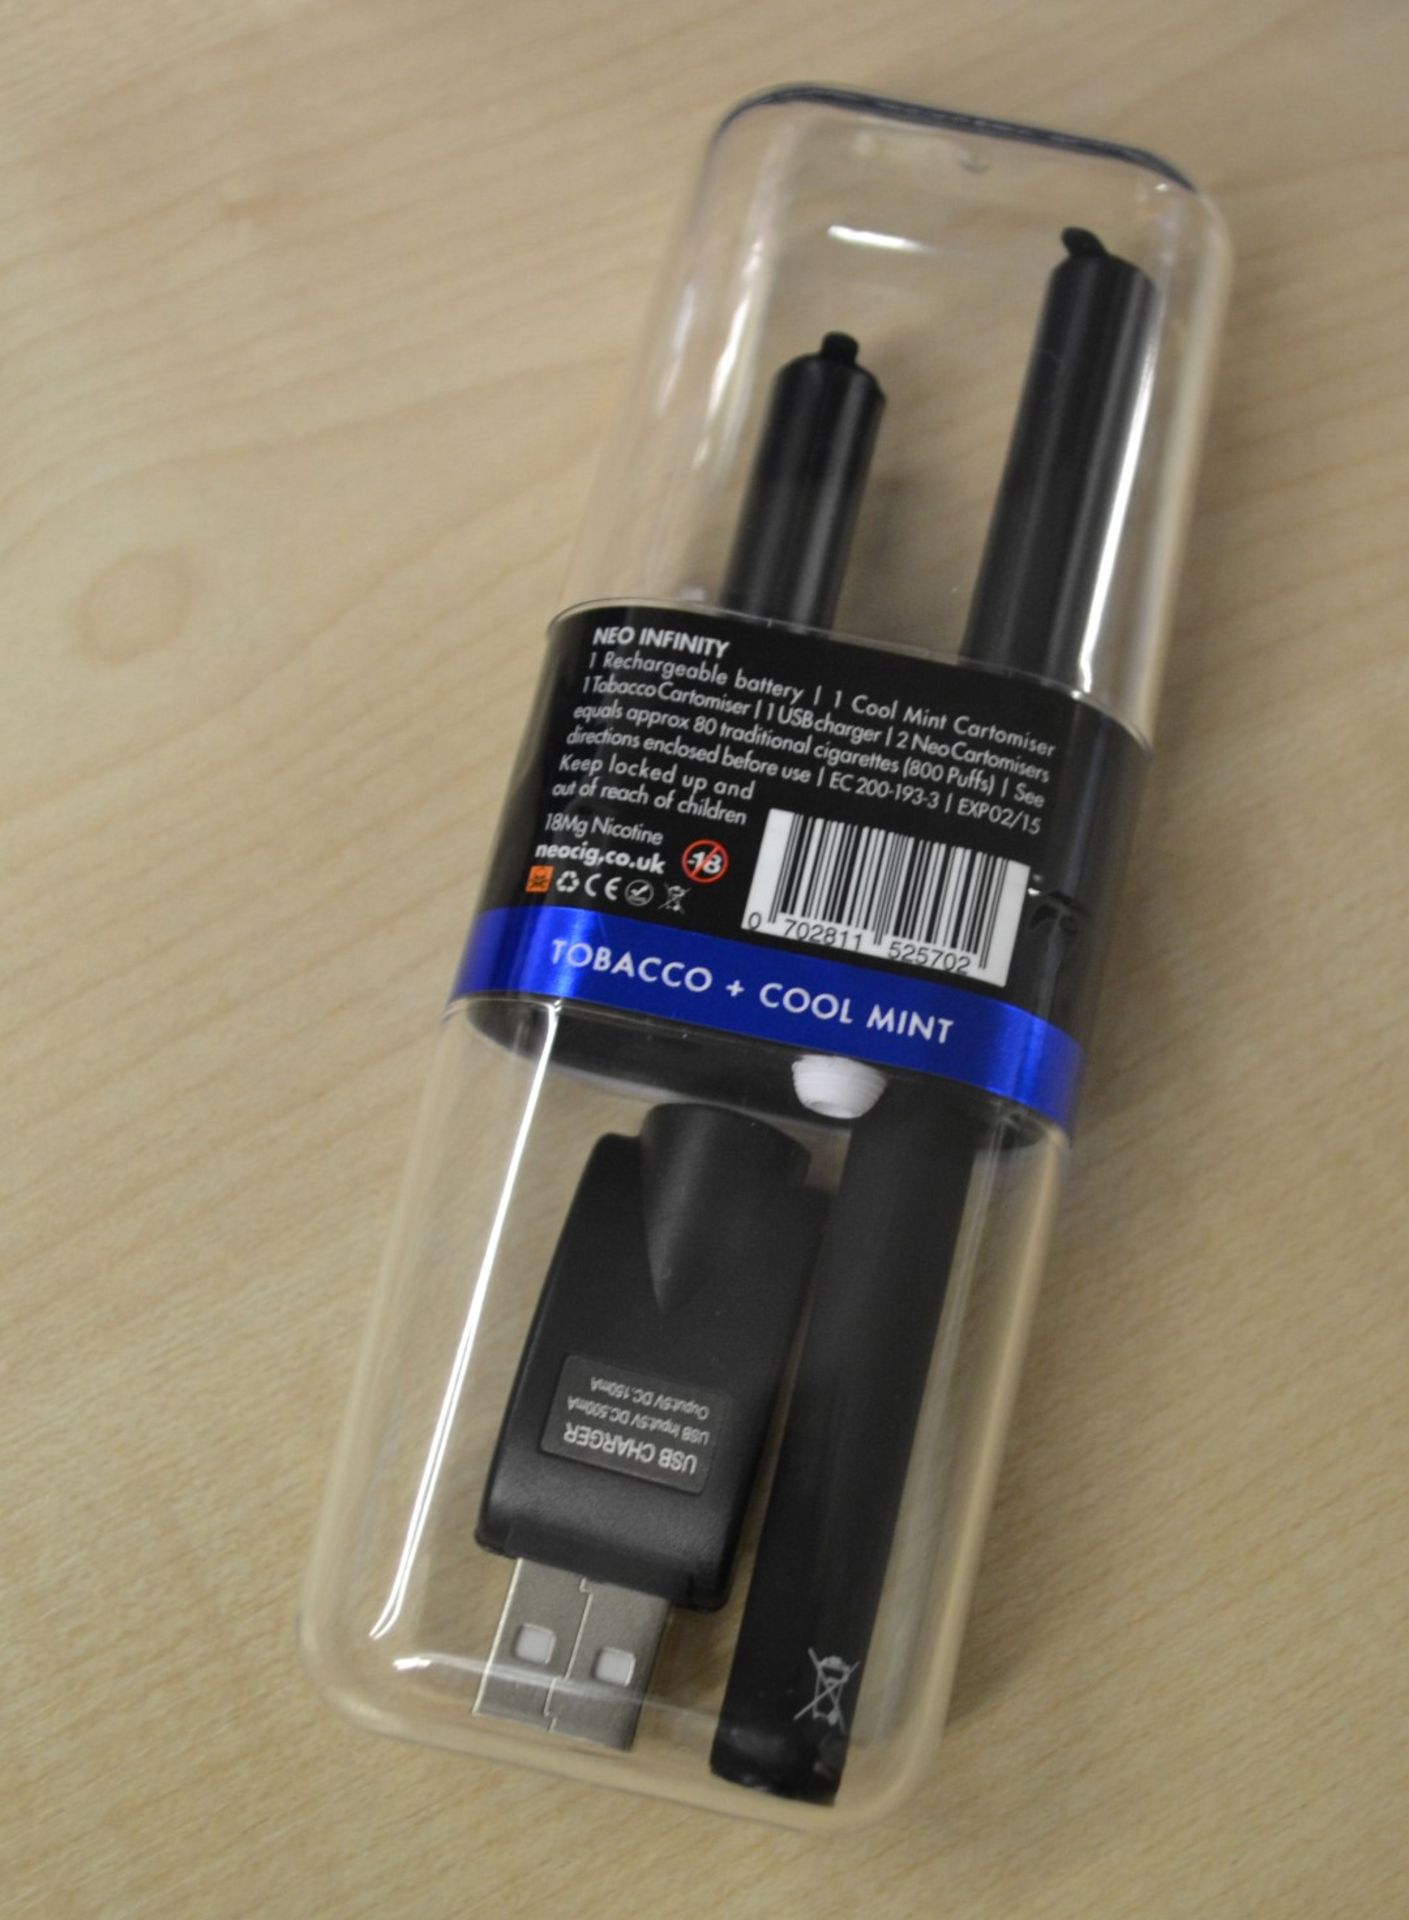 6 x Neo E-Cigarettes Infinity Starter Packs - New & Sealed Stock - CL185 - Ref: DRTISP - Location: S - Image 7 of 7